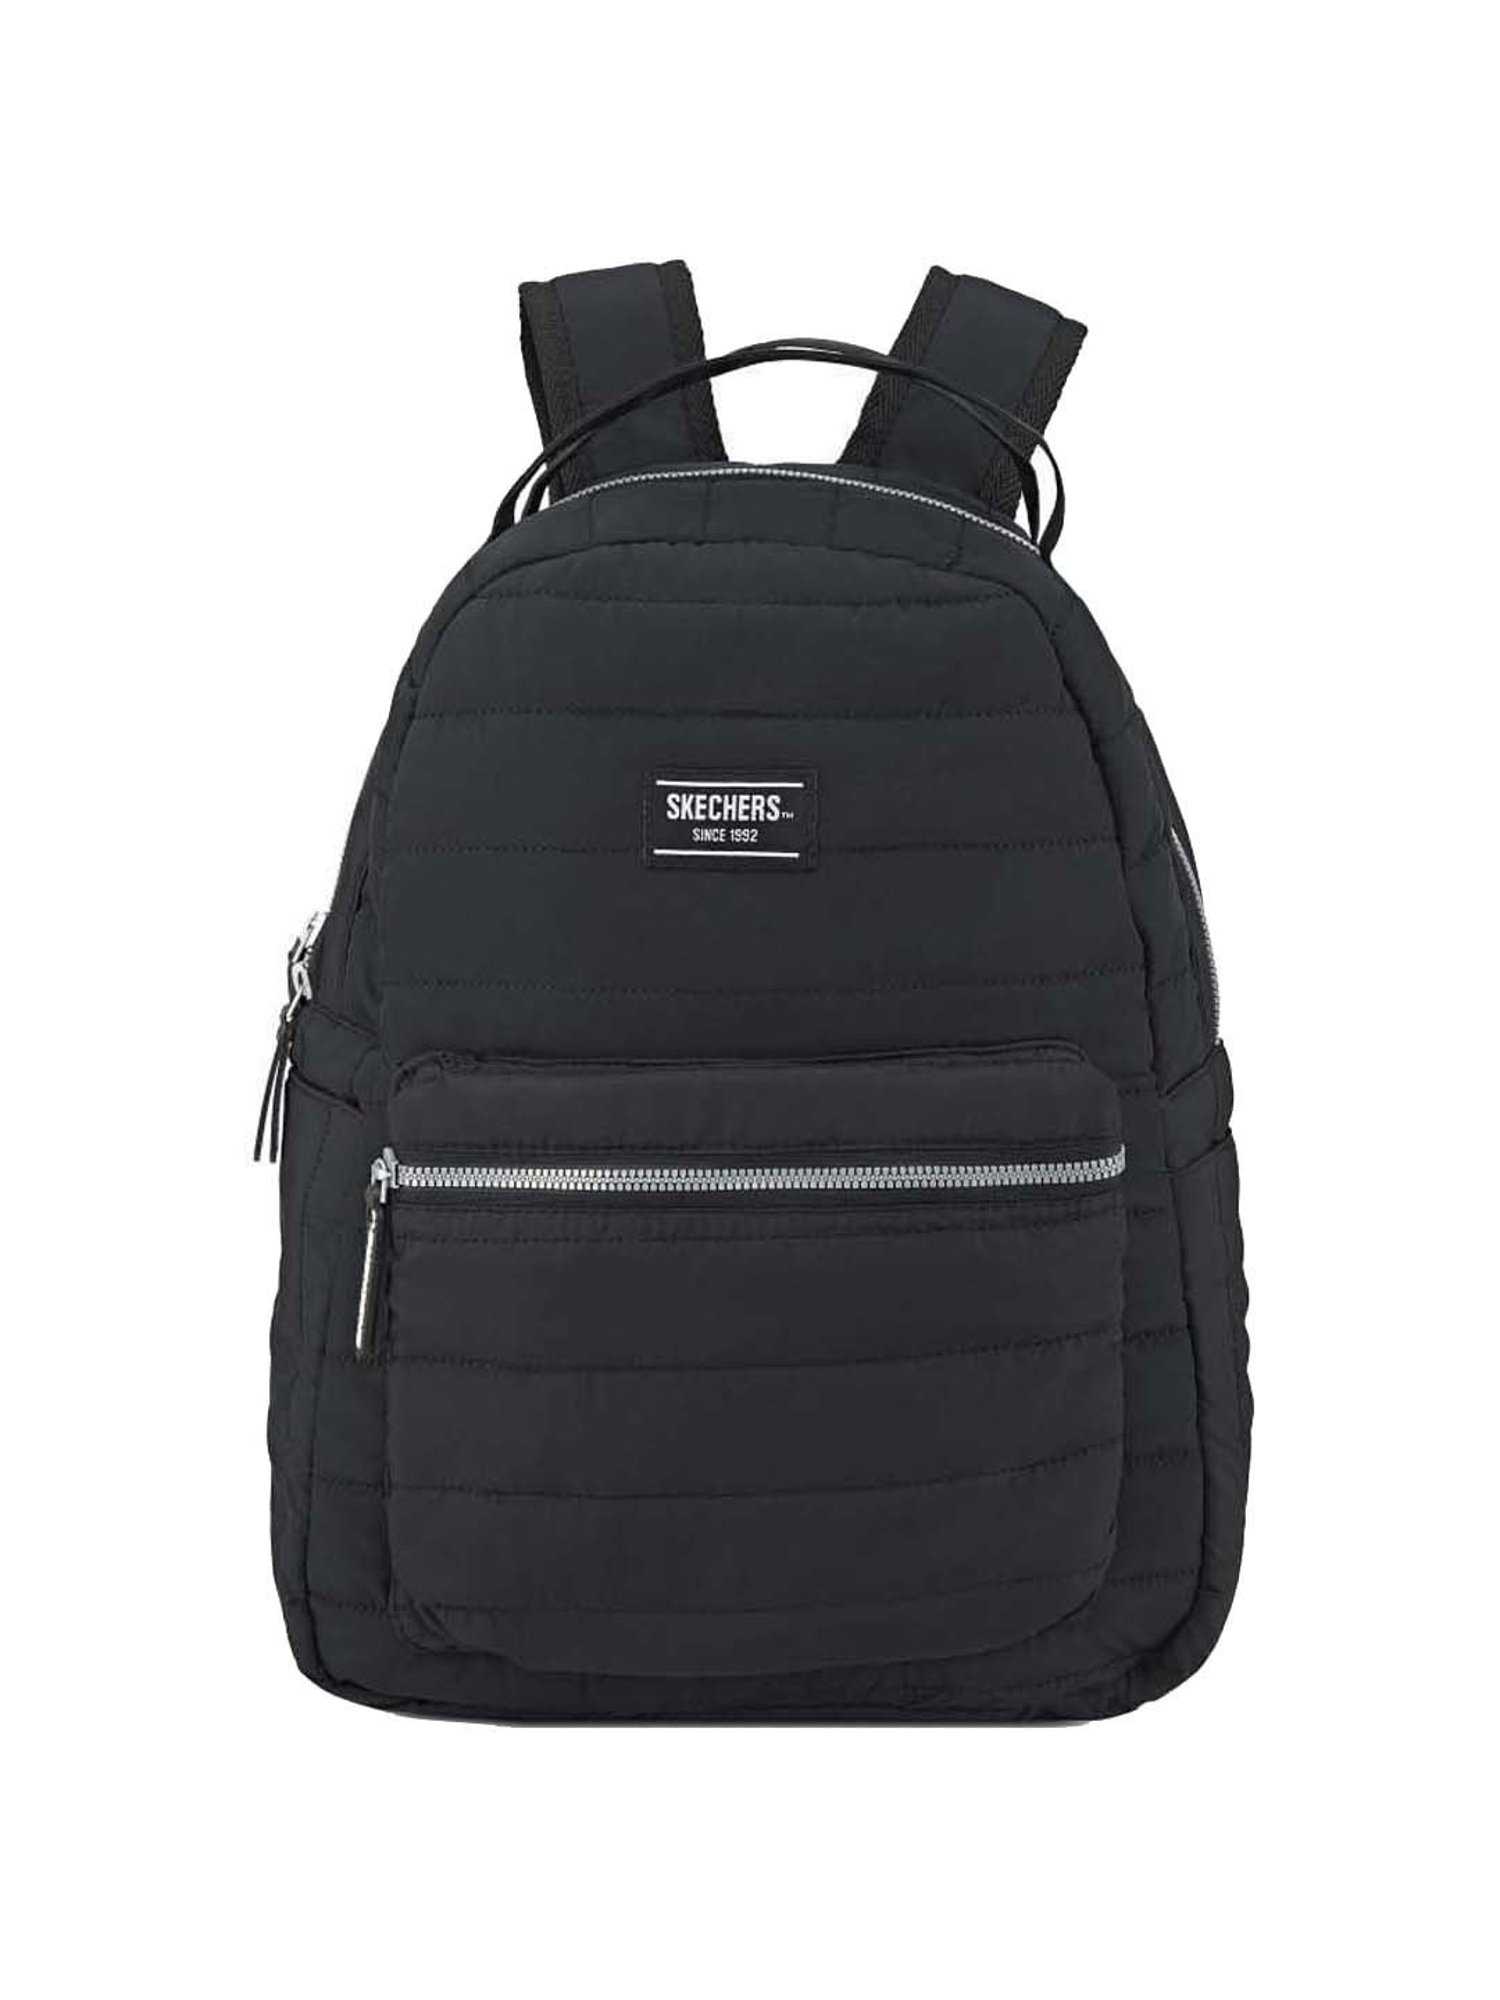 Buy Skechers 15 Ltrs Peach Medium Laptop Backpack Online At Best Price   Tata CLiQ